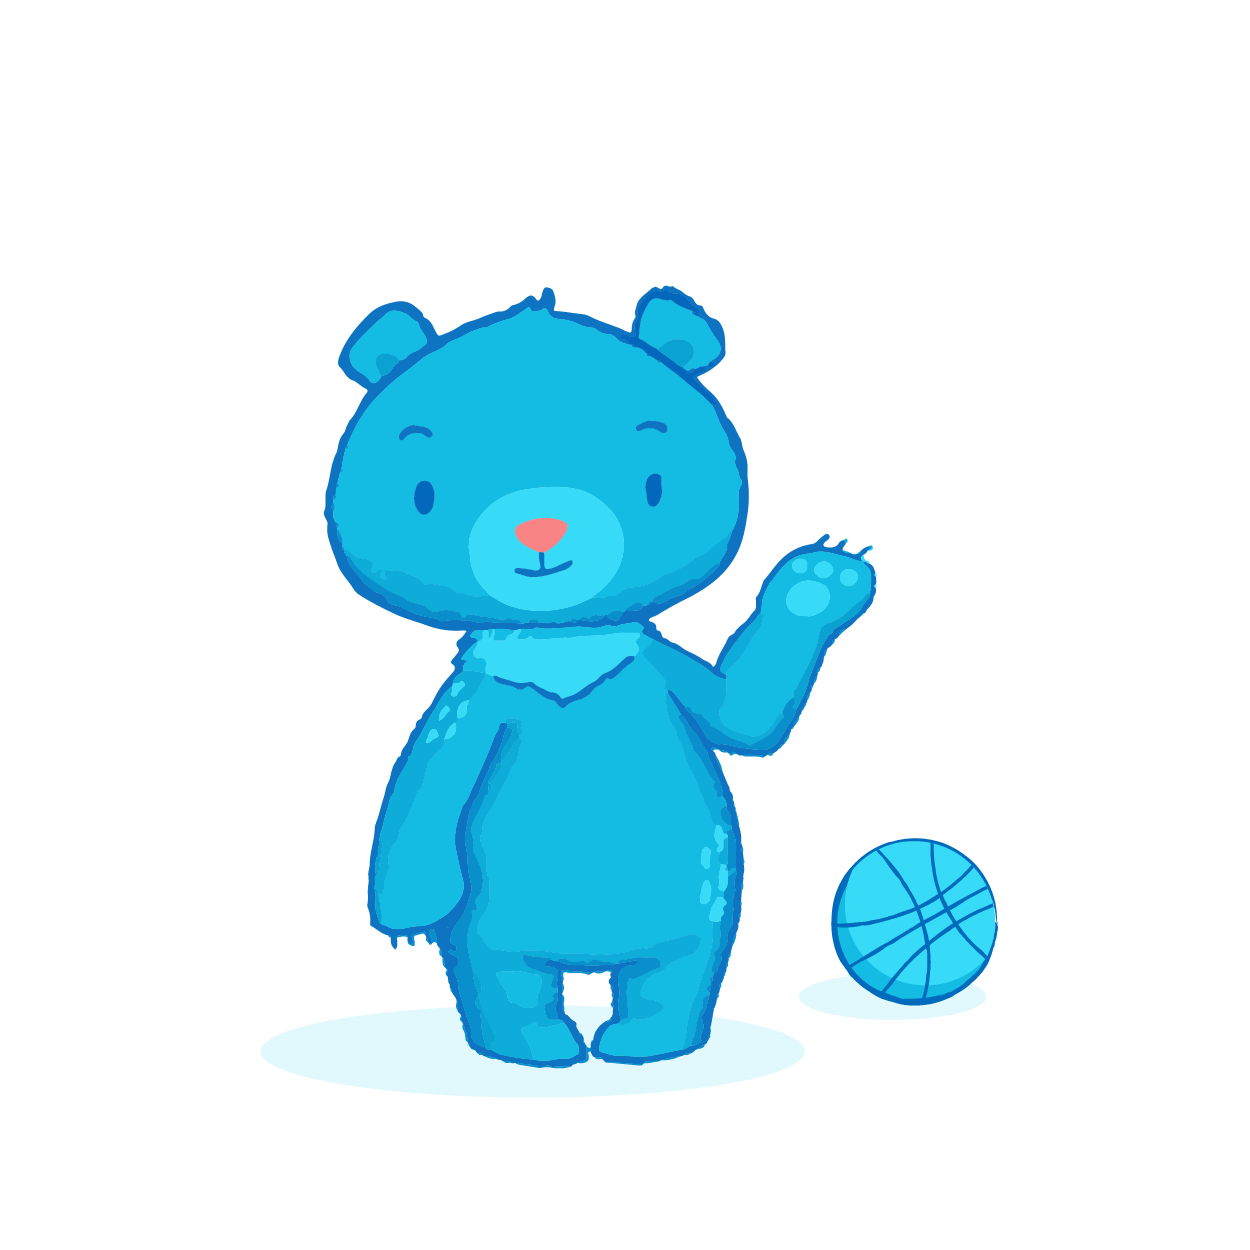 Drawing of little bear dribbling a basketball